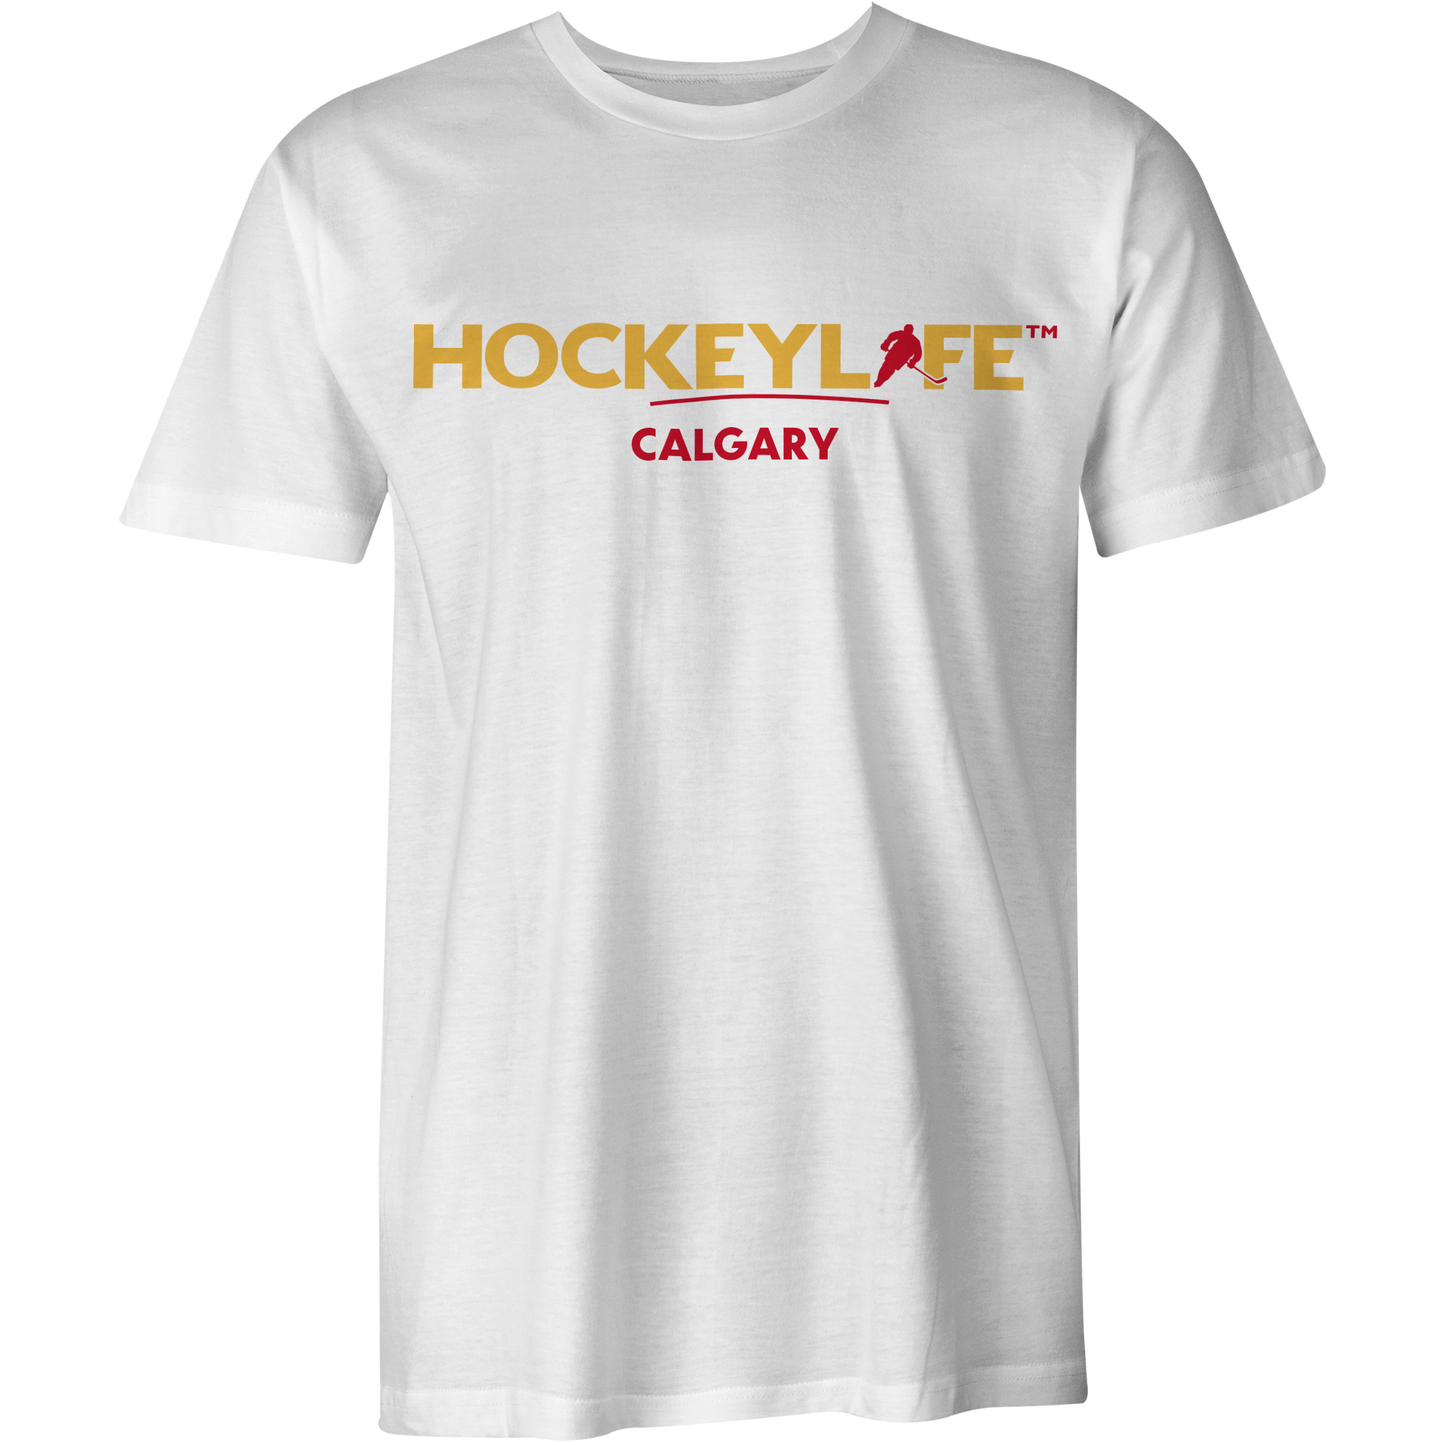 HockeyLife Calgary Tee Shirt